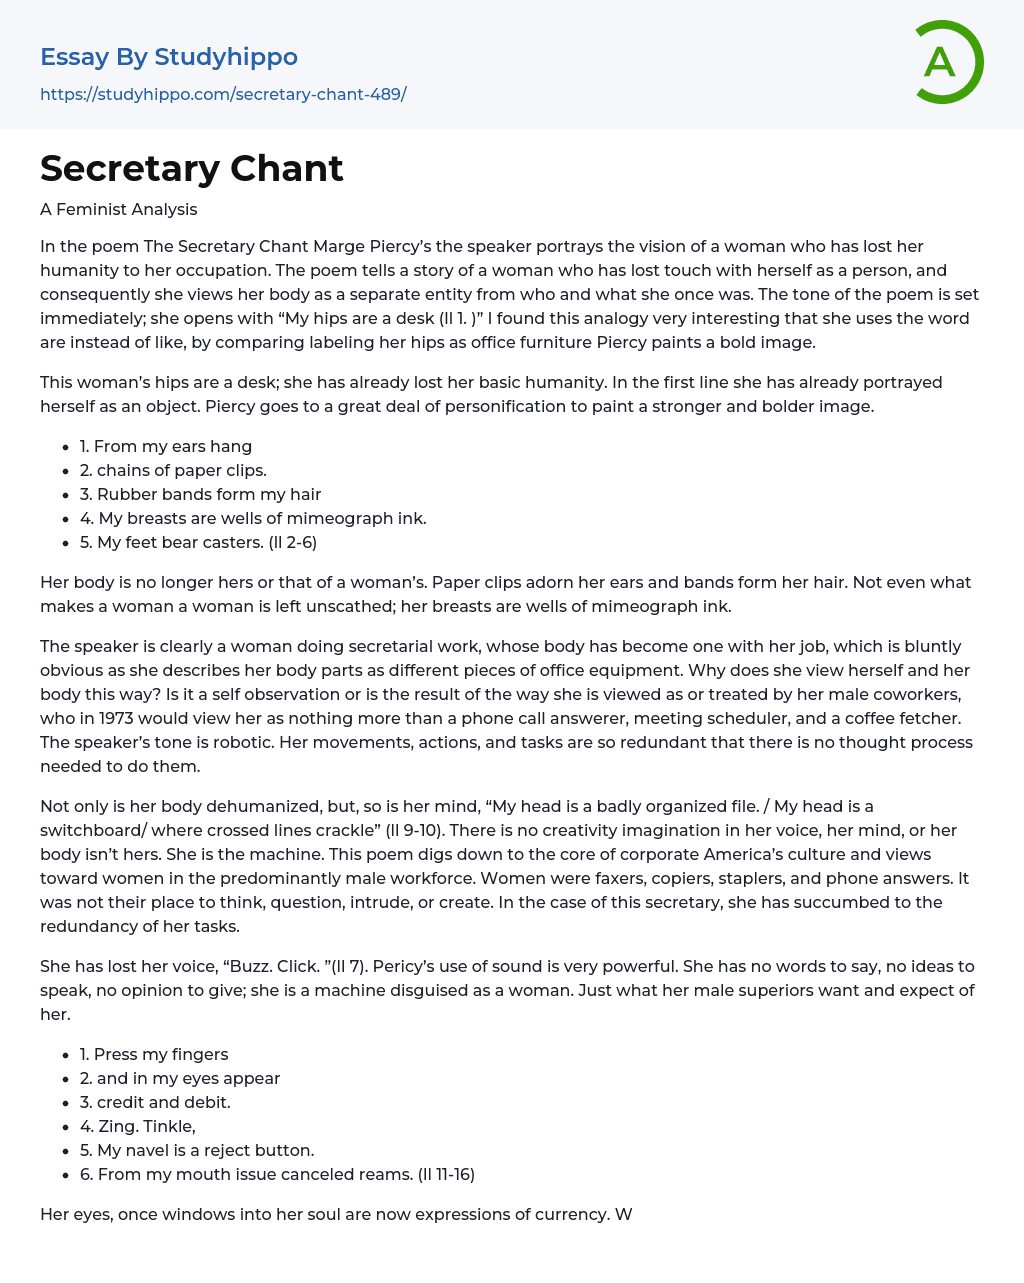 Poem “The Secretary Chant”: A Feminist Analysis Essay Example